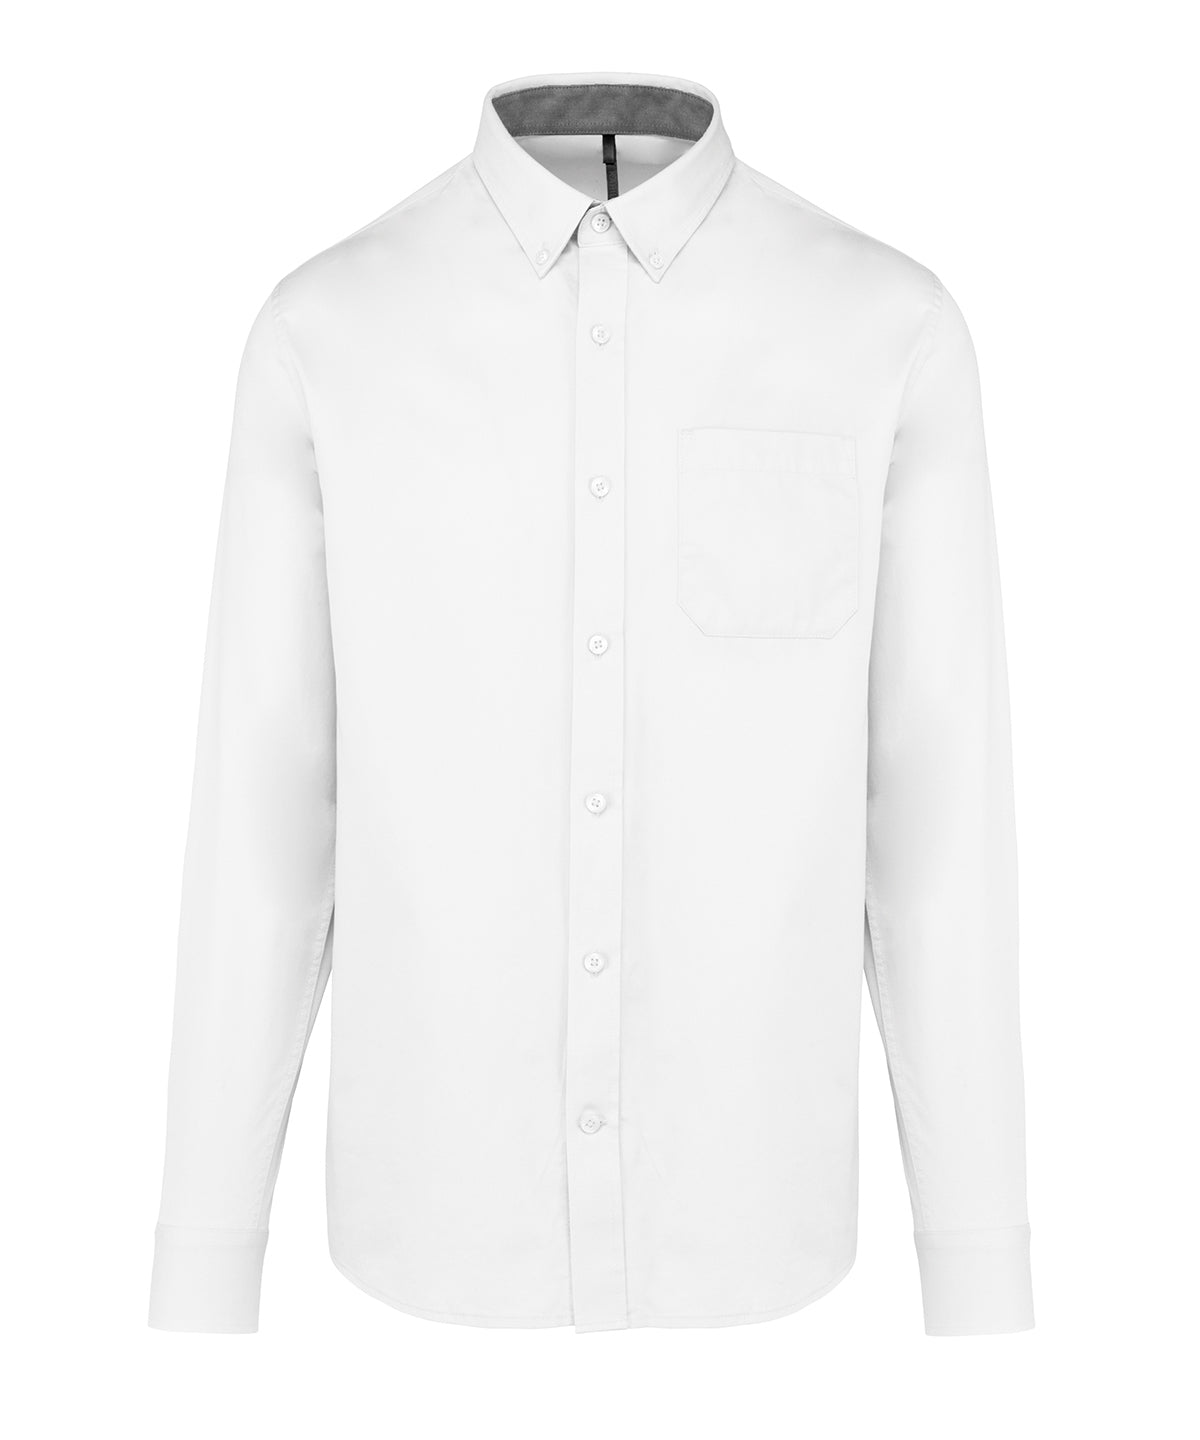 Bolir - Men's Nevada Long Sleeve Cotton Shirt